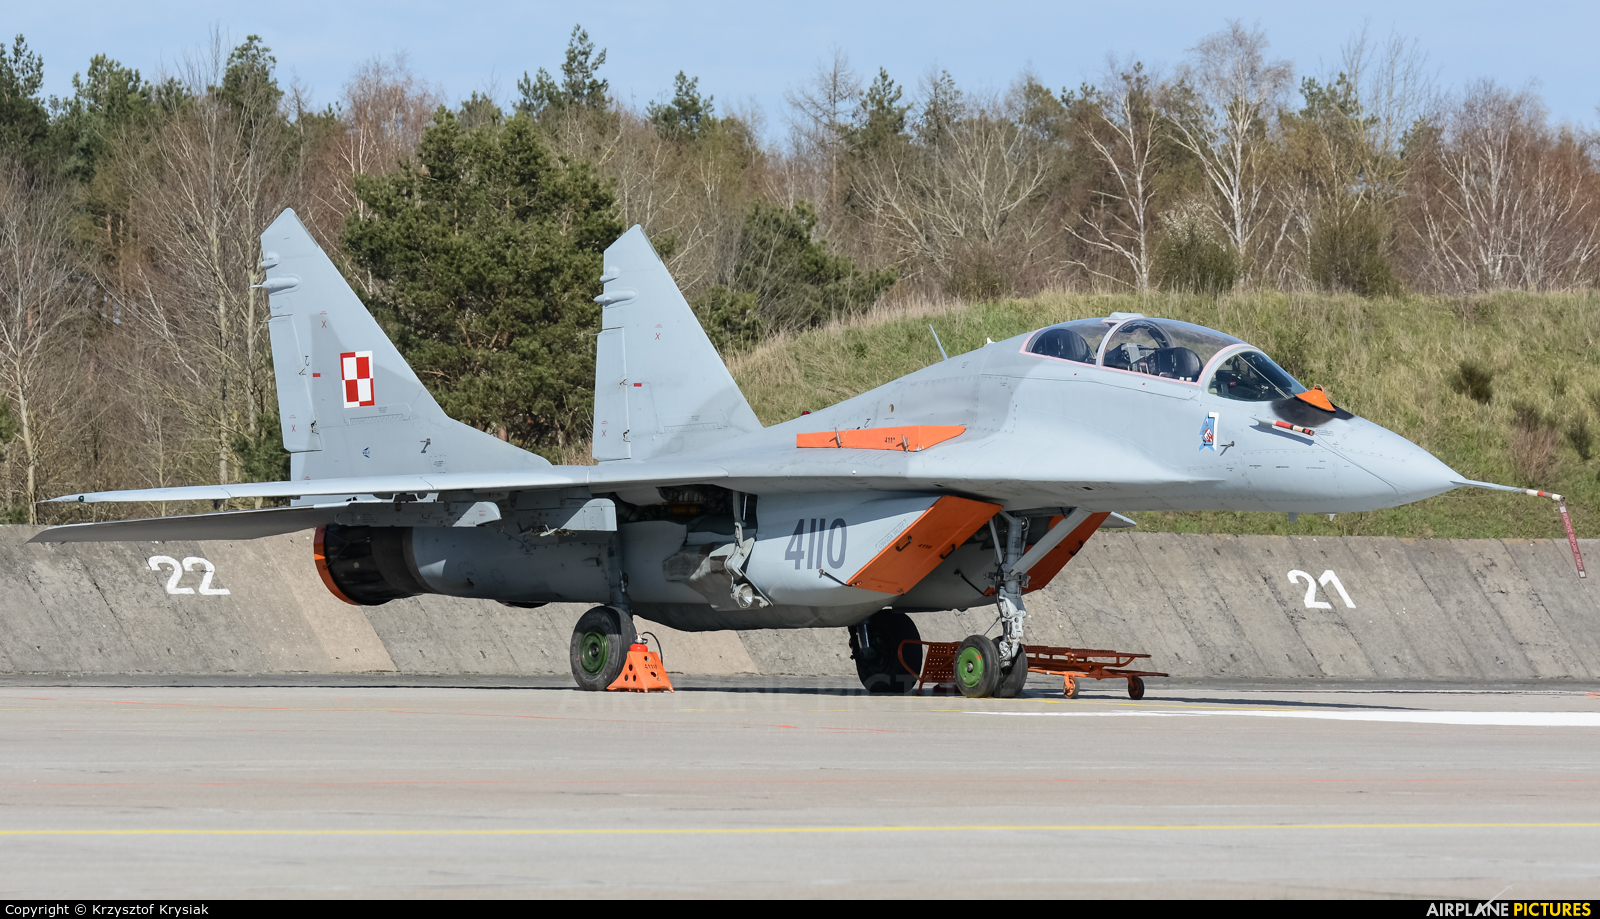 Poland - Air Force 4110 aircraft at Świdwin